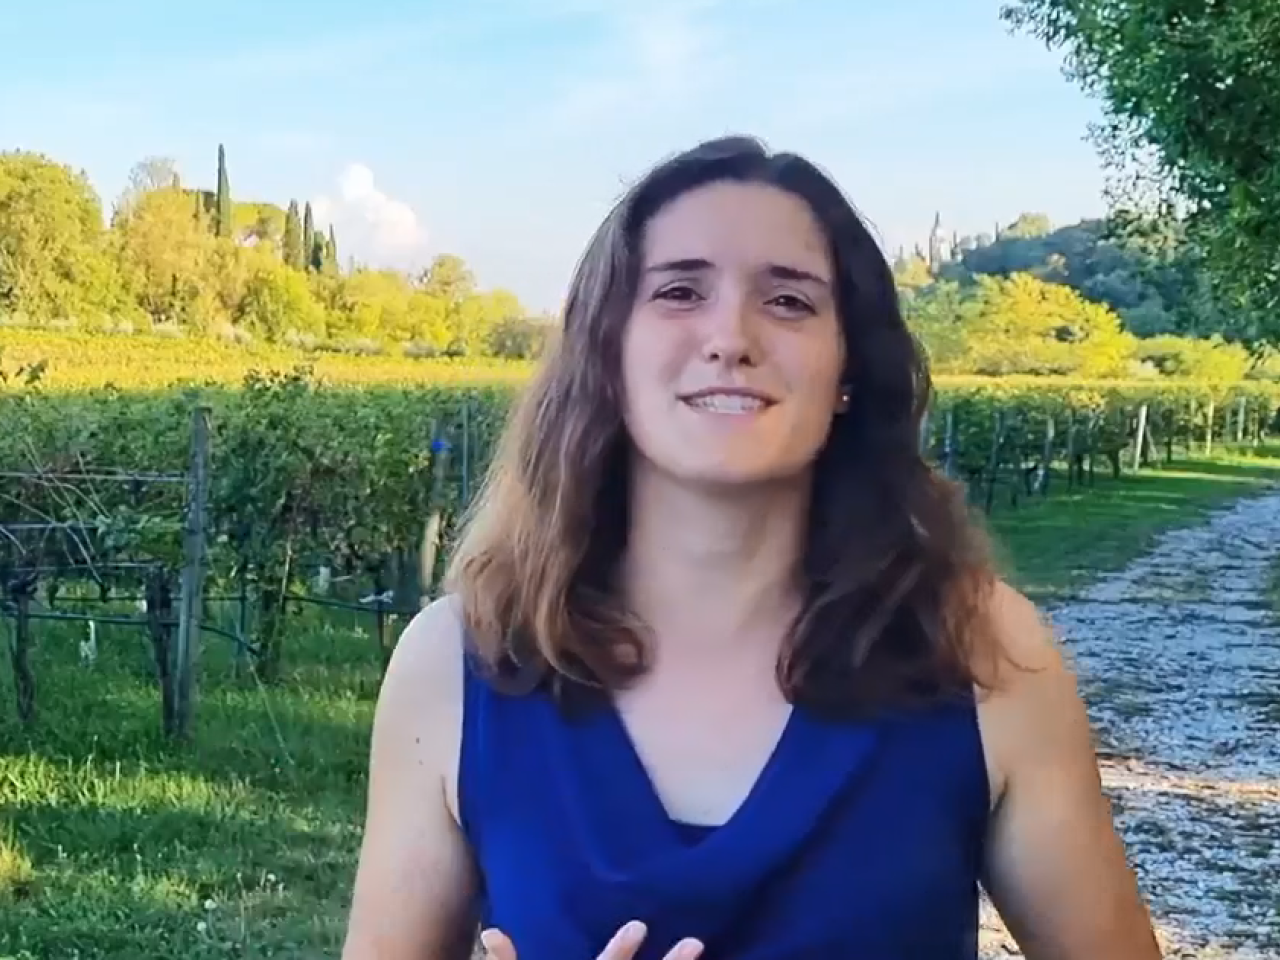 Silvia Caprara in a vineyard.